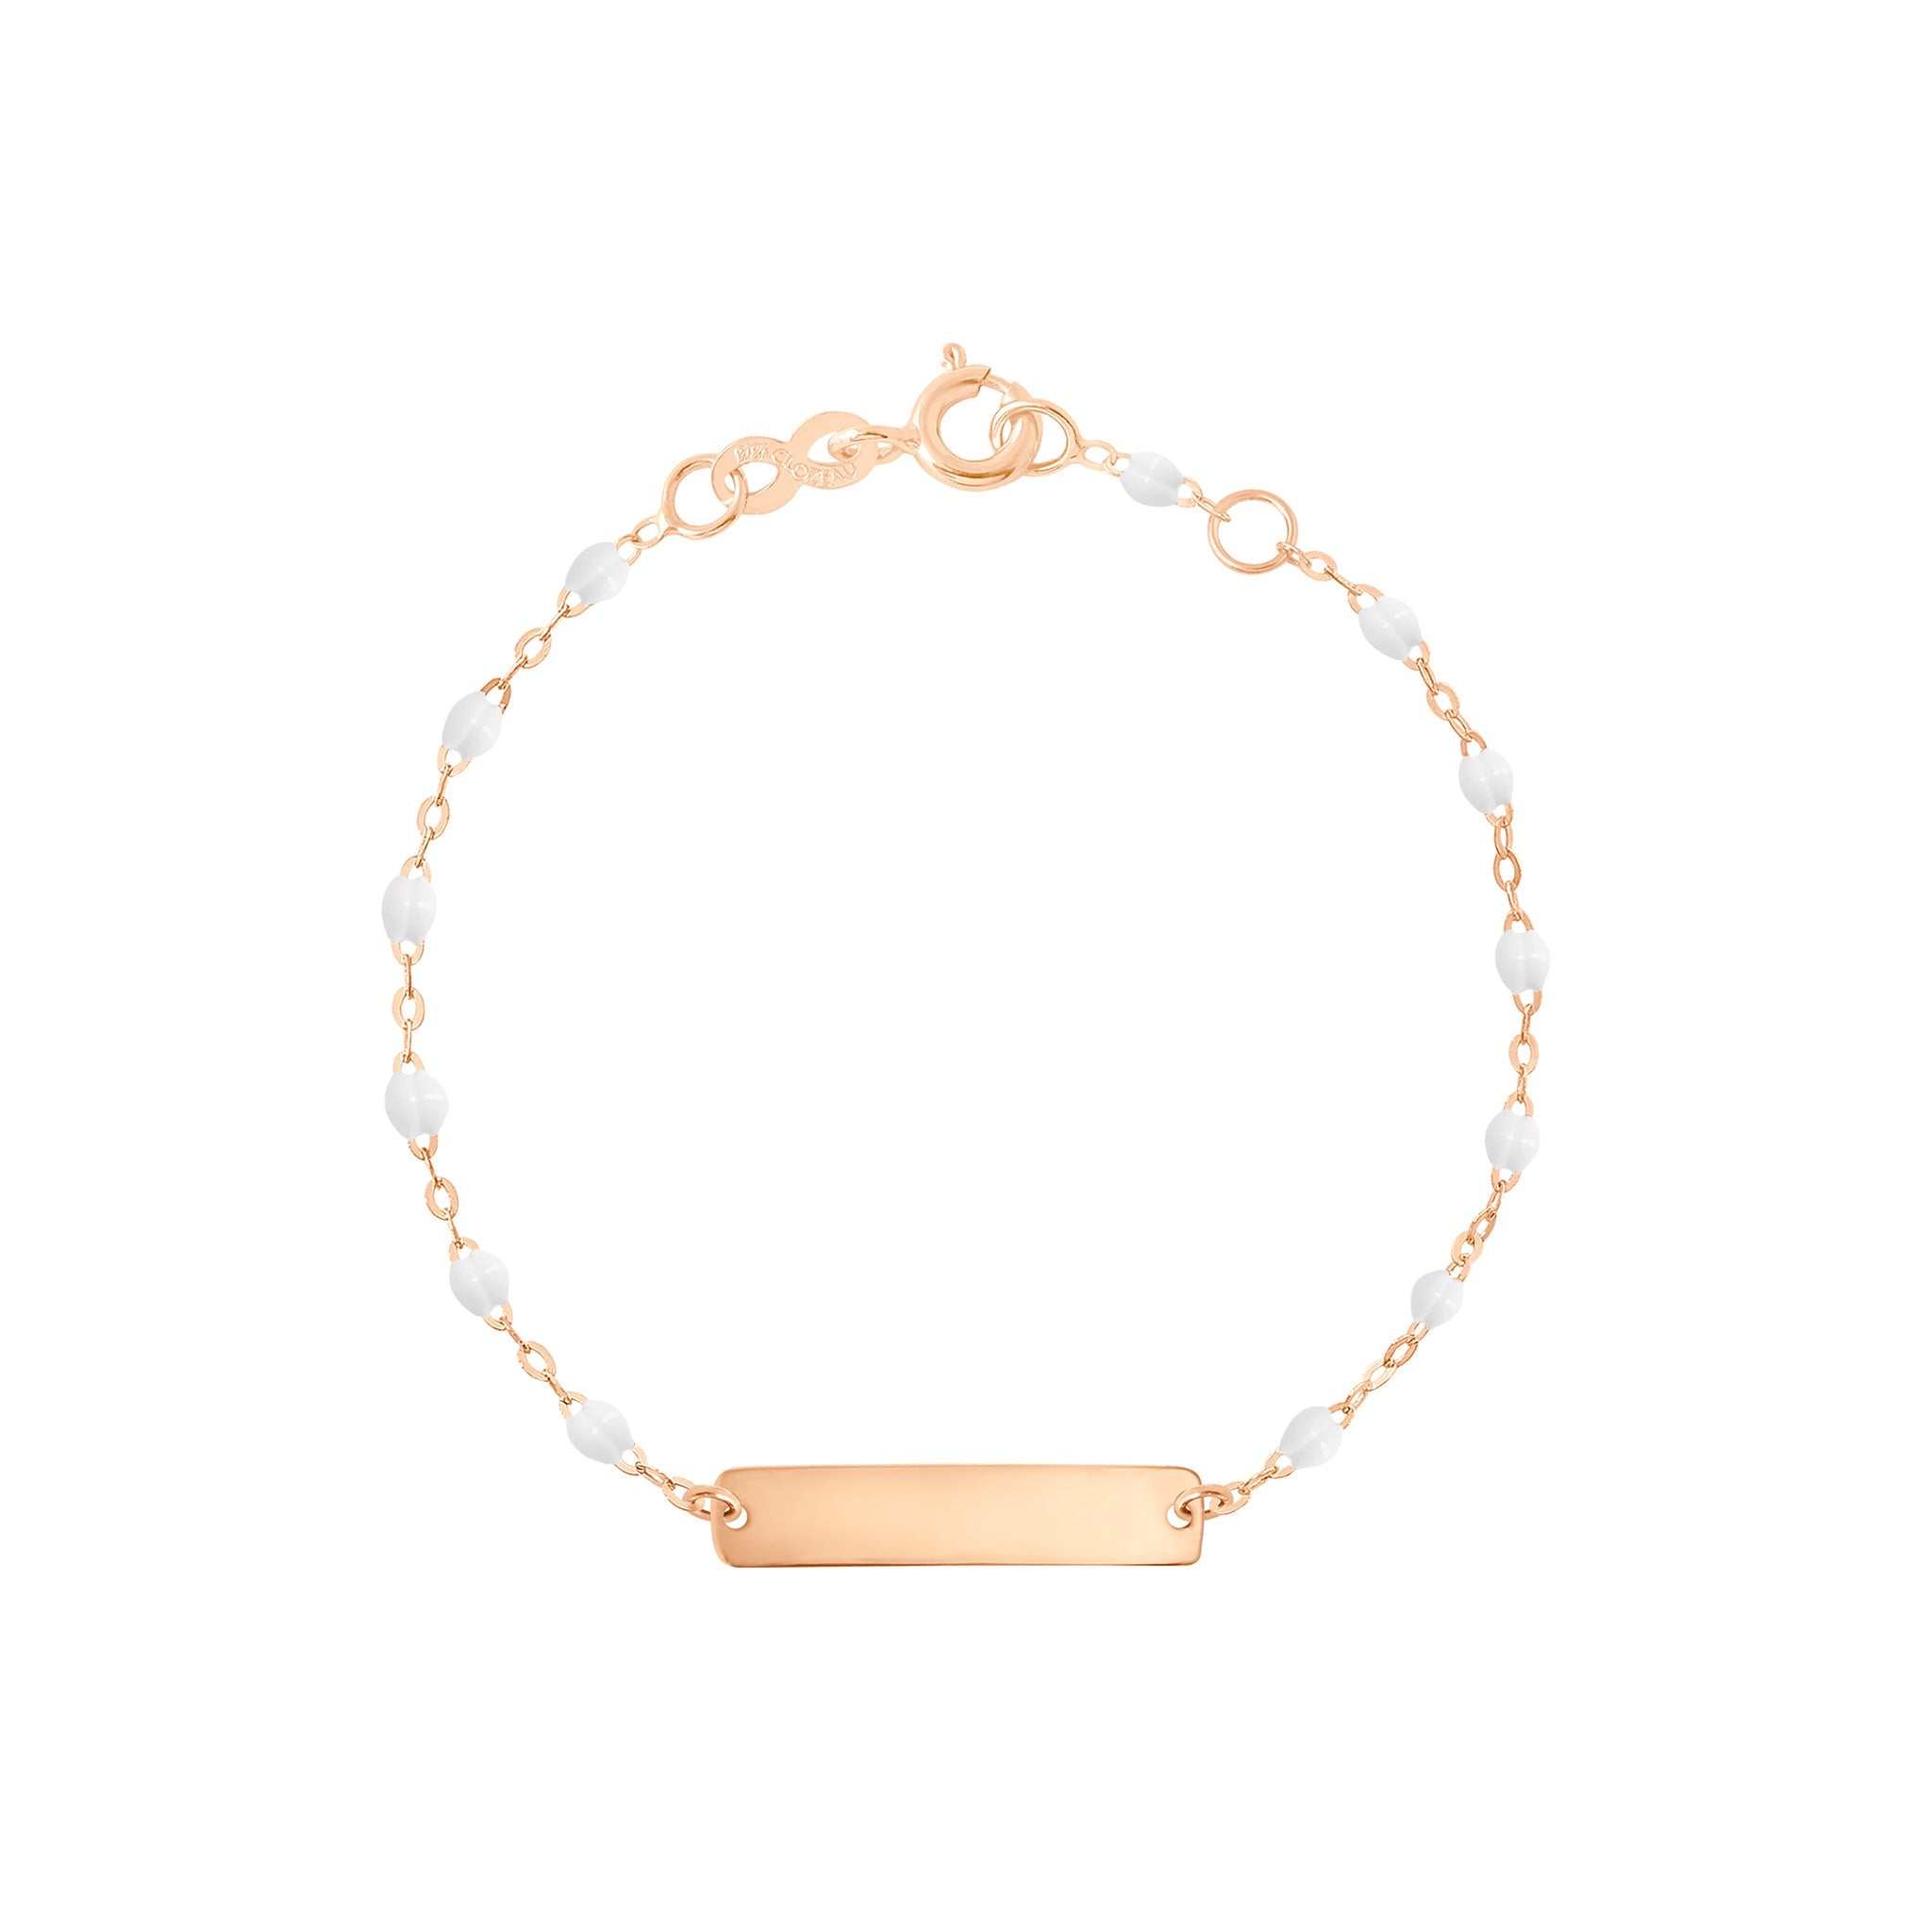 Gigi Clozeau - Little Gigi White bracelet, Rectangle plaque, Rose Gold, 5.9"